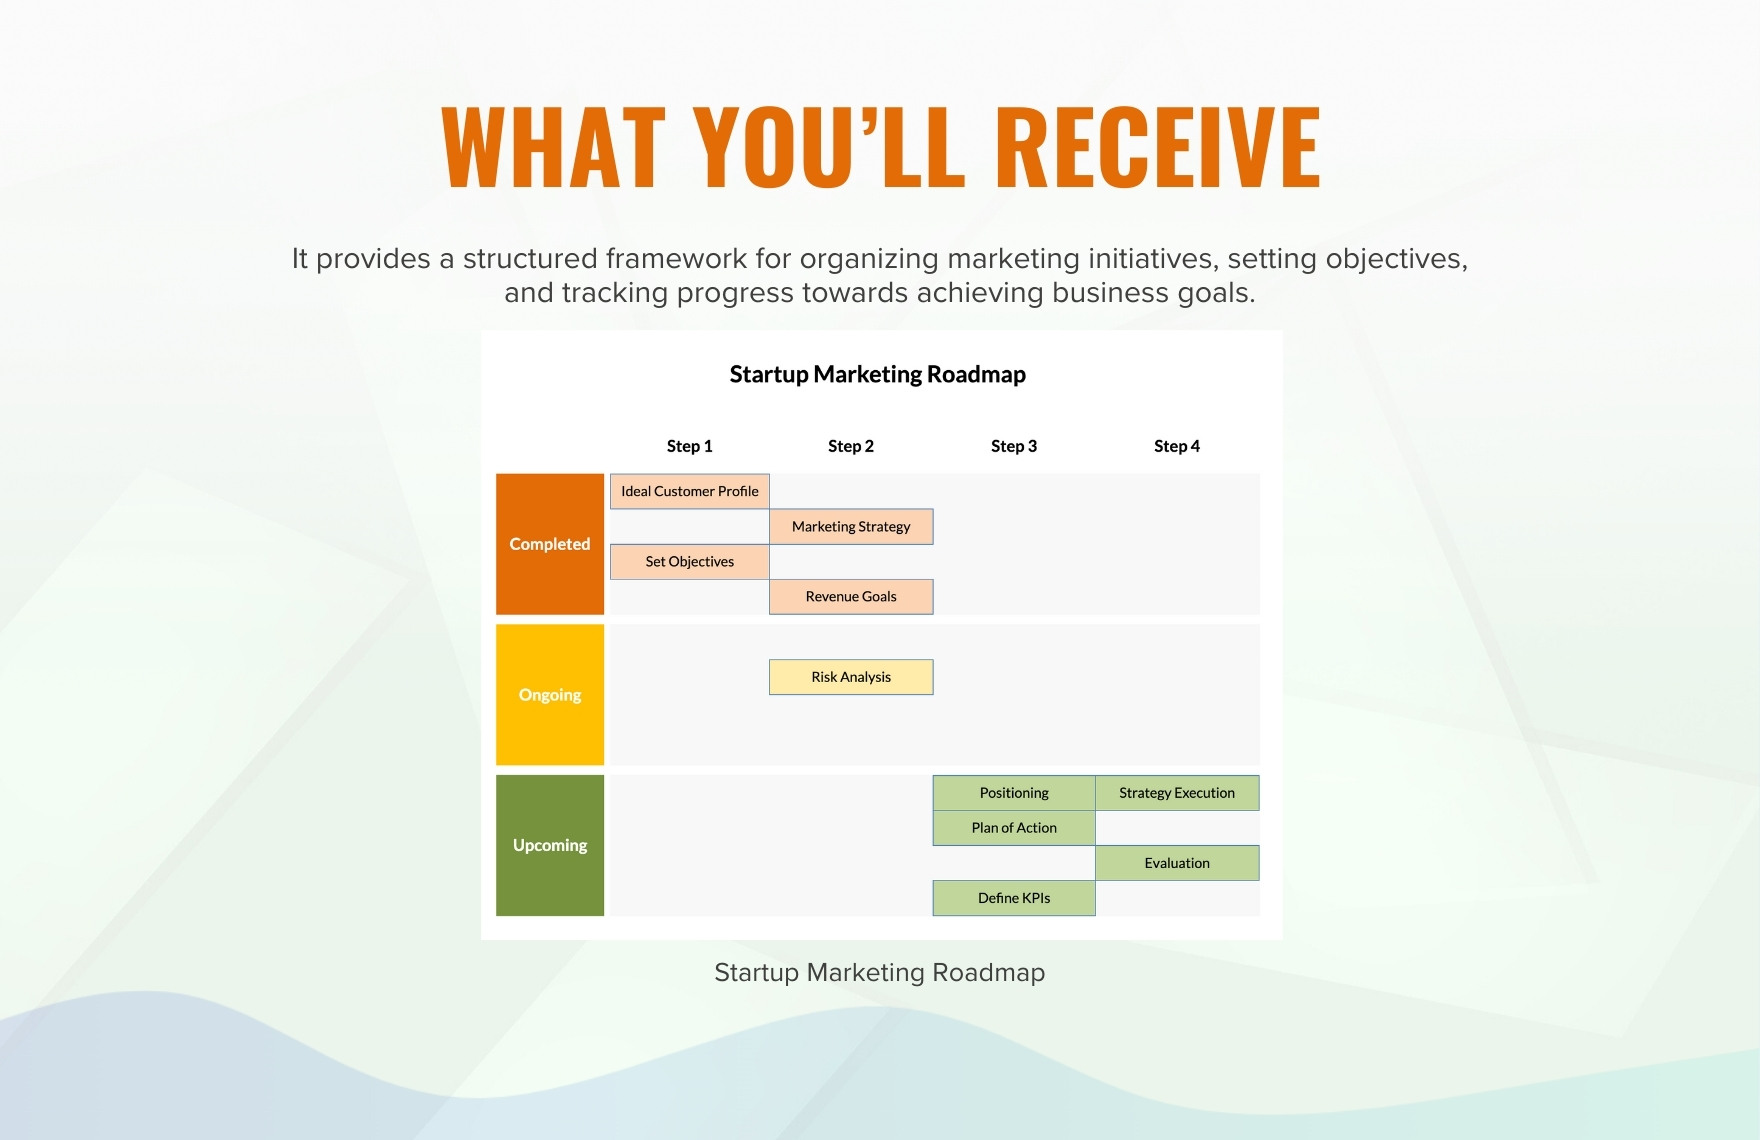 Startup Marketing Roadmap Template